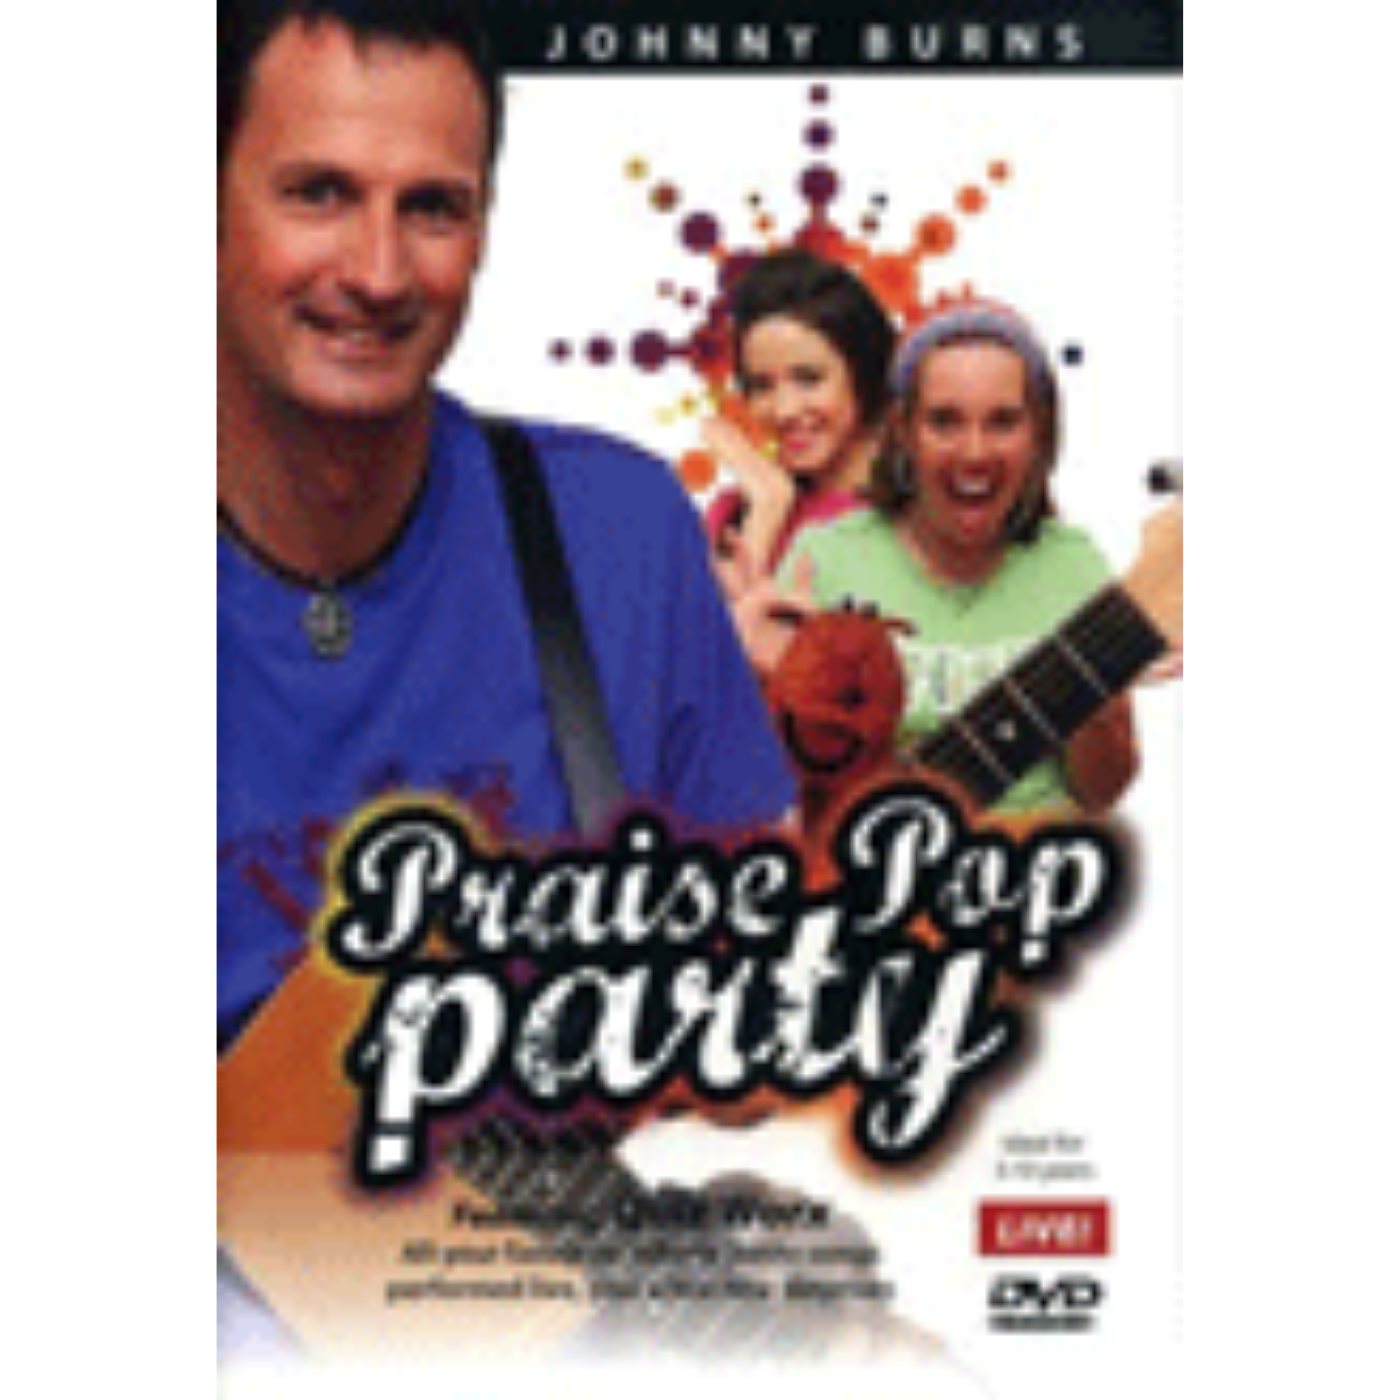 Praise Pop Party DVD (AUSTRALIA ONLY)